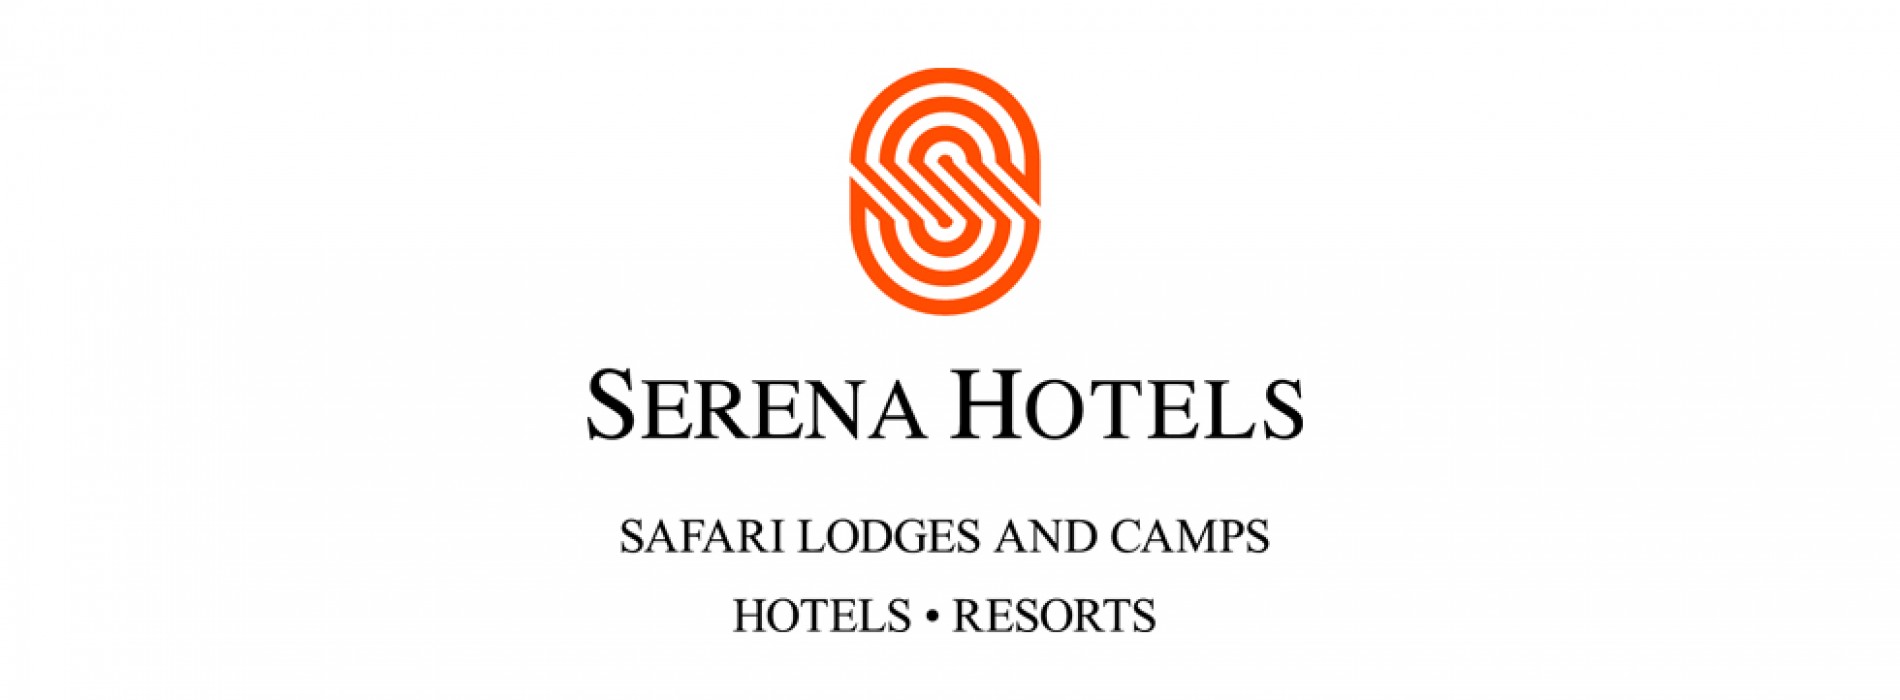 Serena Hotels wins Seven Titles at the World Travel Awards 2017